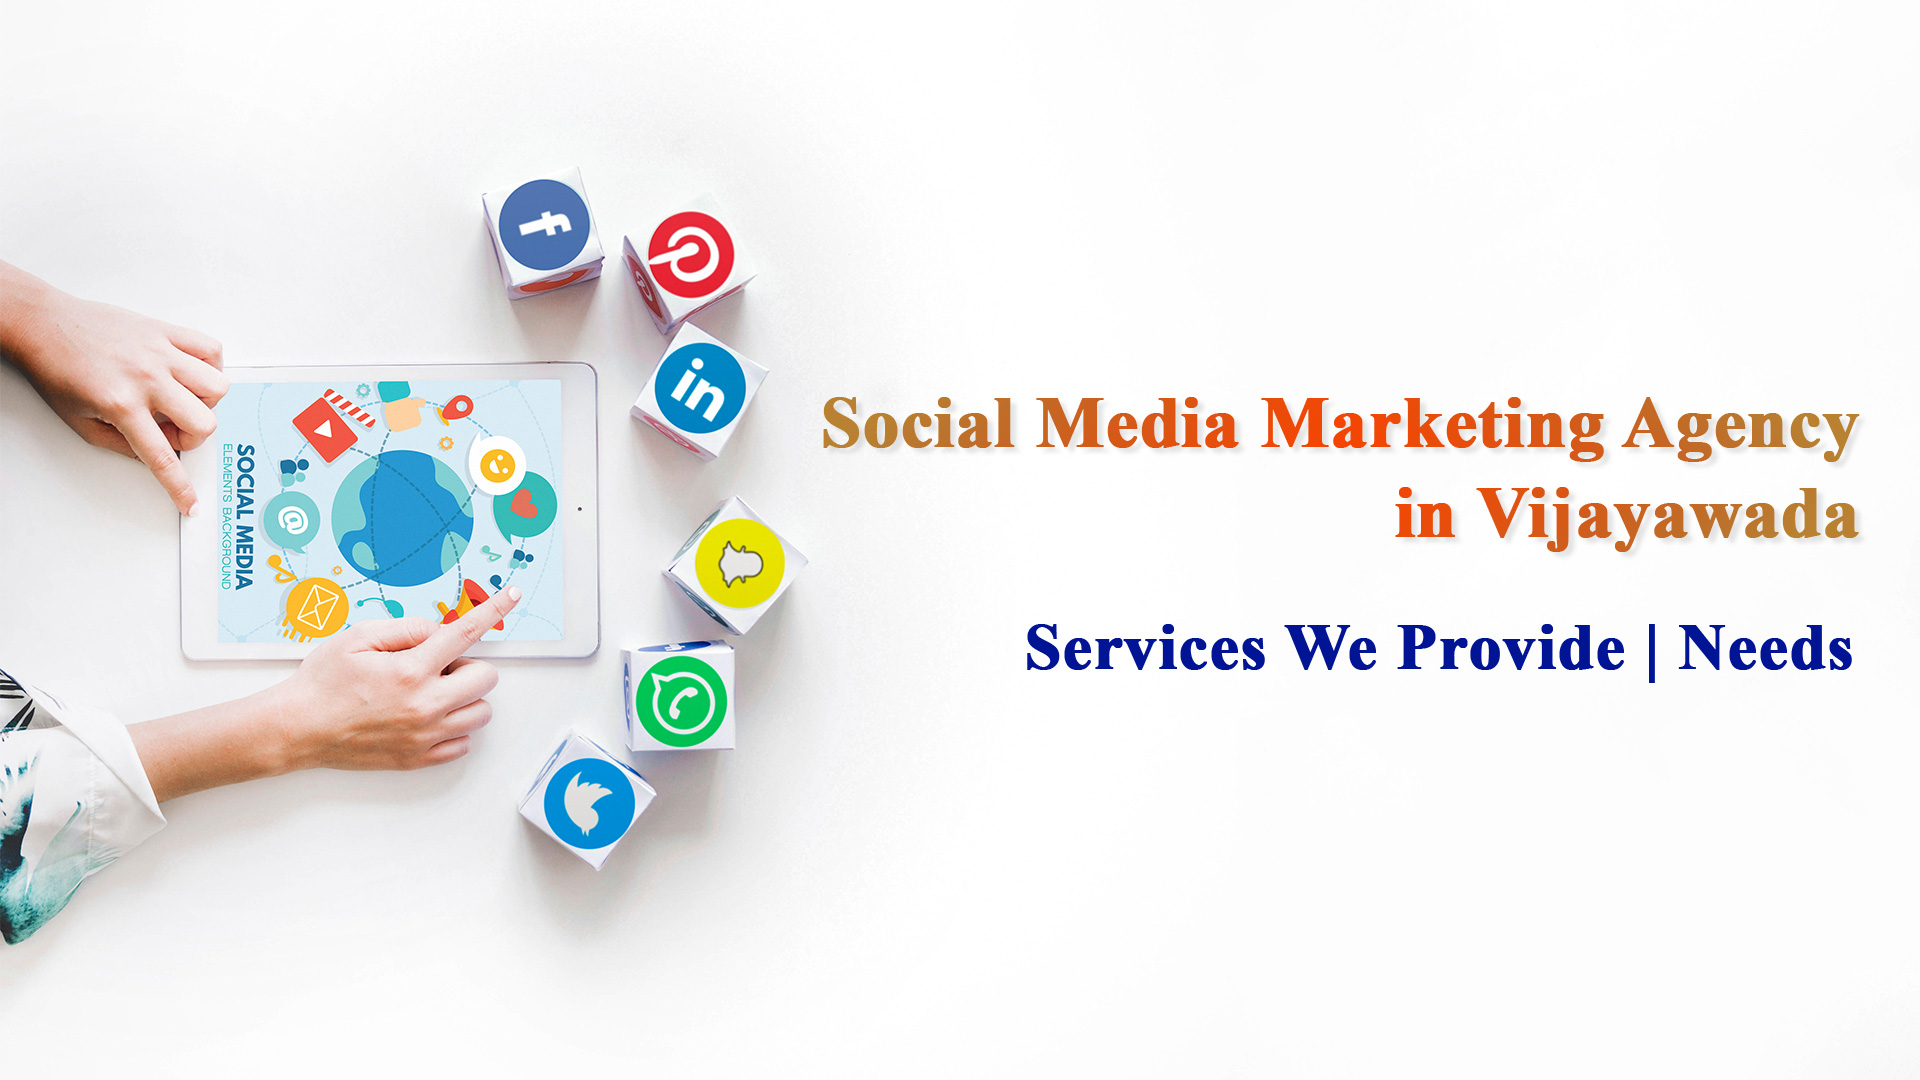 social-media-marketing-agency-in-vijayawada-and-the-services-we-provide